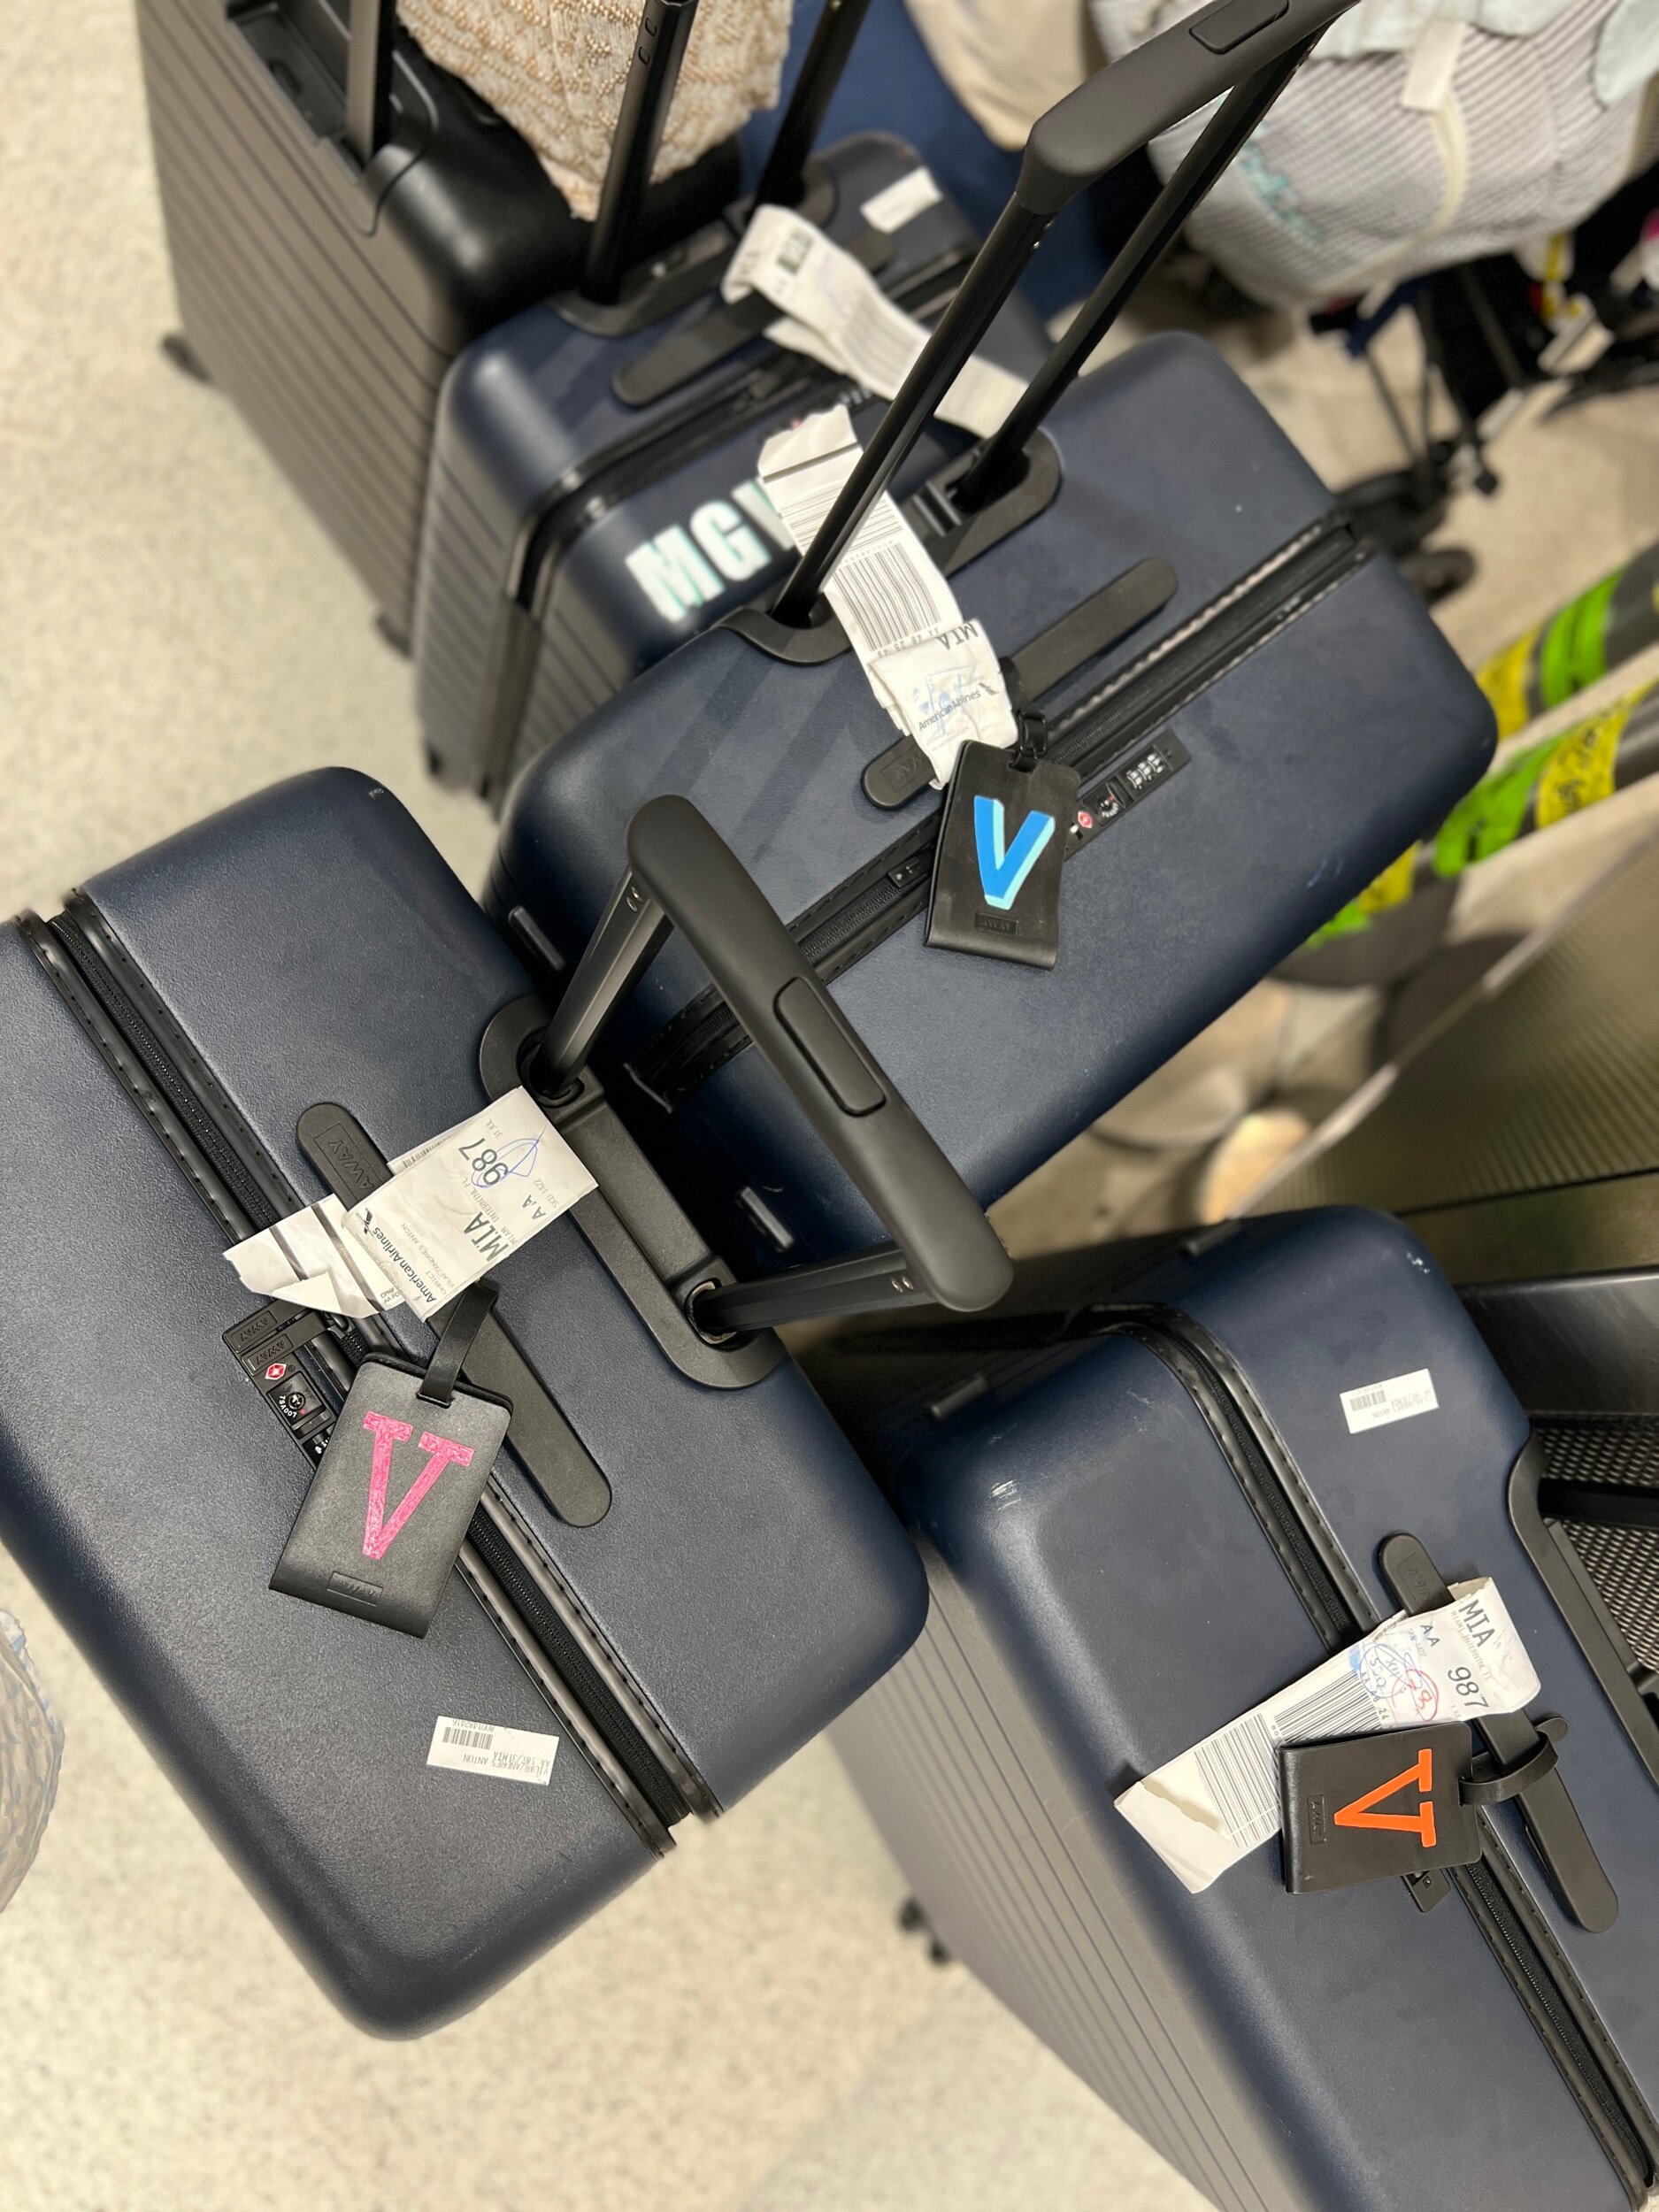 Luggage Tag - You Won't Look Good baggage tag